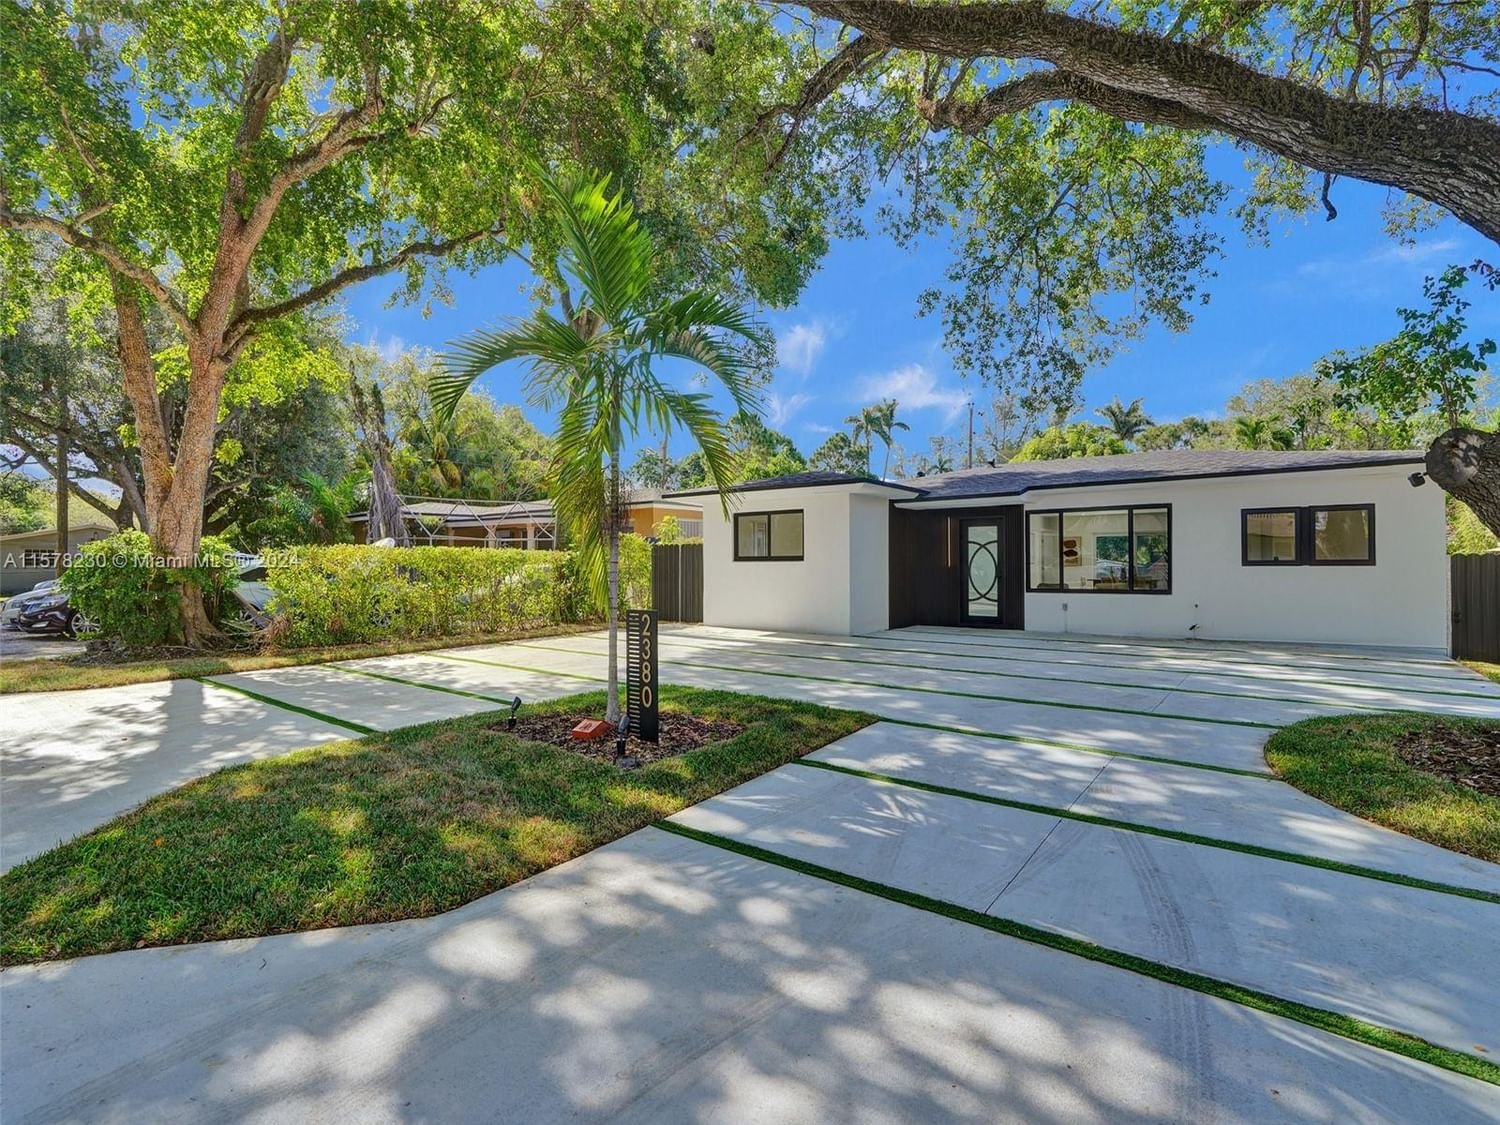 Real estate property located at 2380 184th Ter, Miami-Dade County, RIVERDALE, North Miami Beach, FL